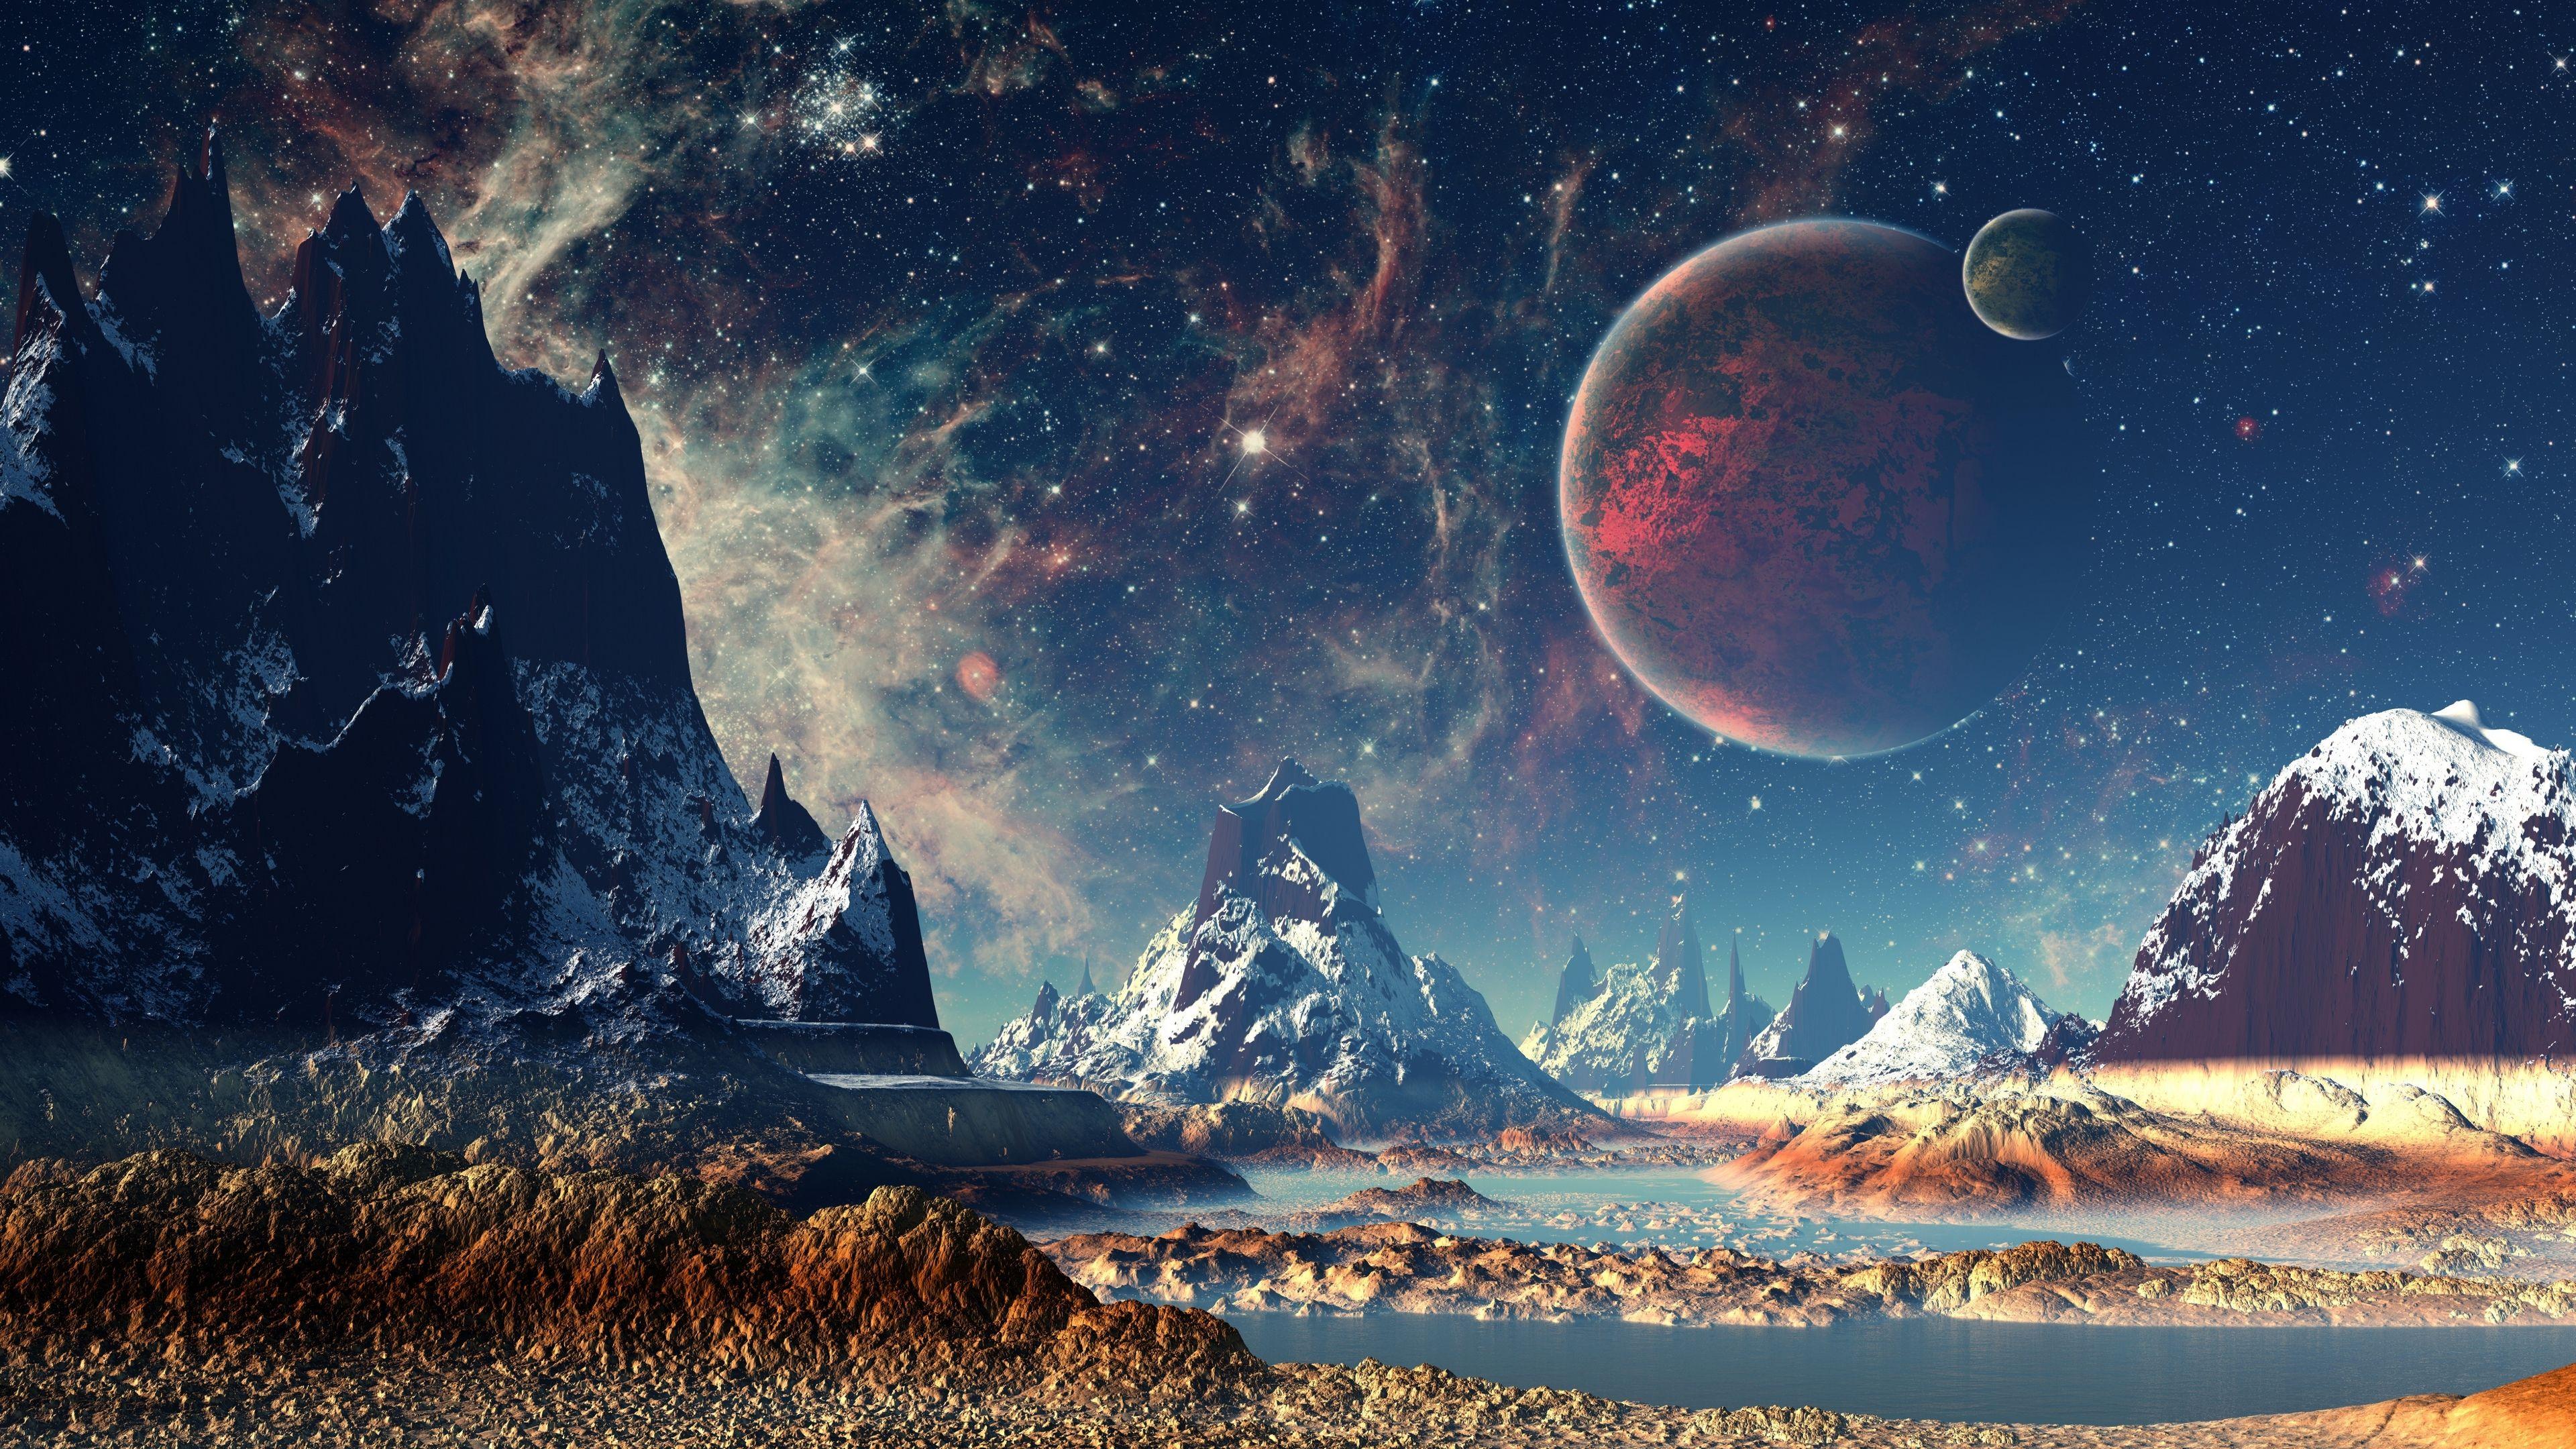 Sci-Fi Landscape Wallpapers - Top Free Sci-Fi Landscape ...